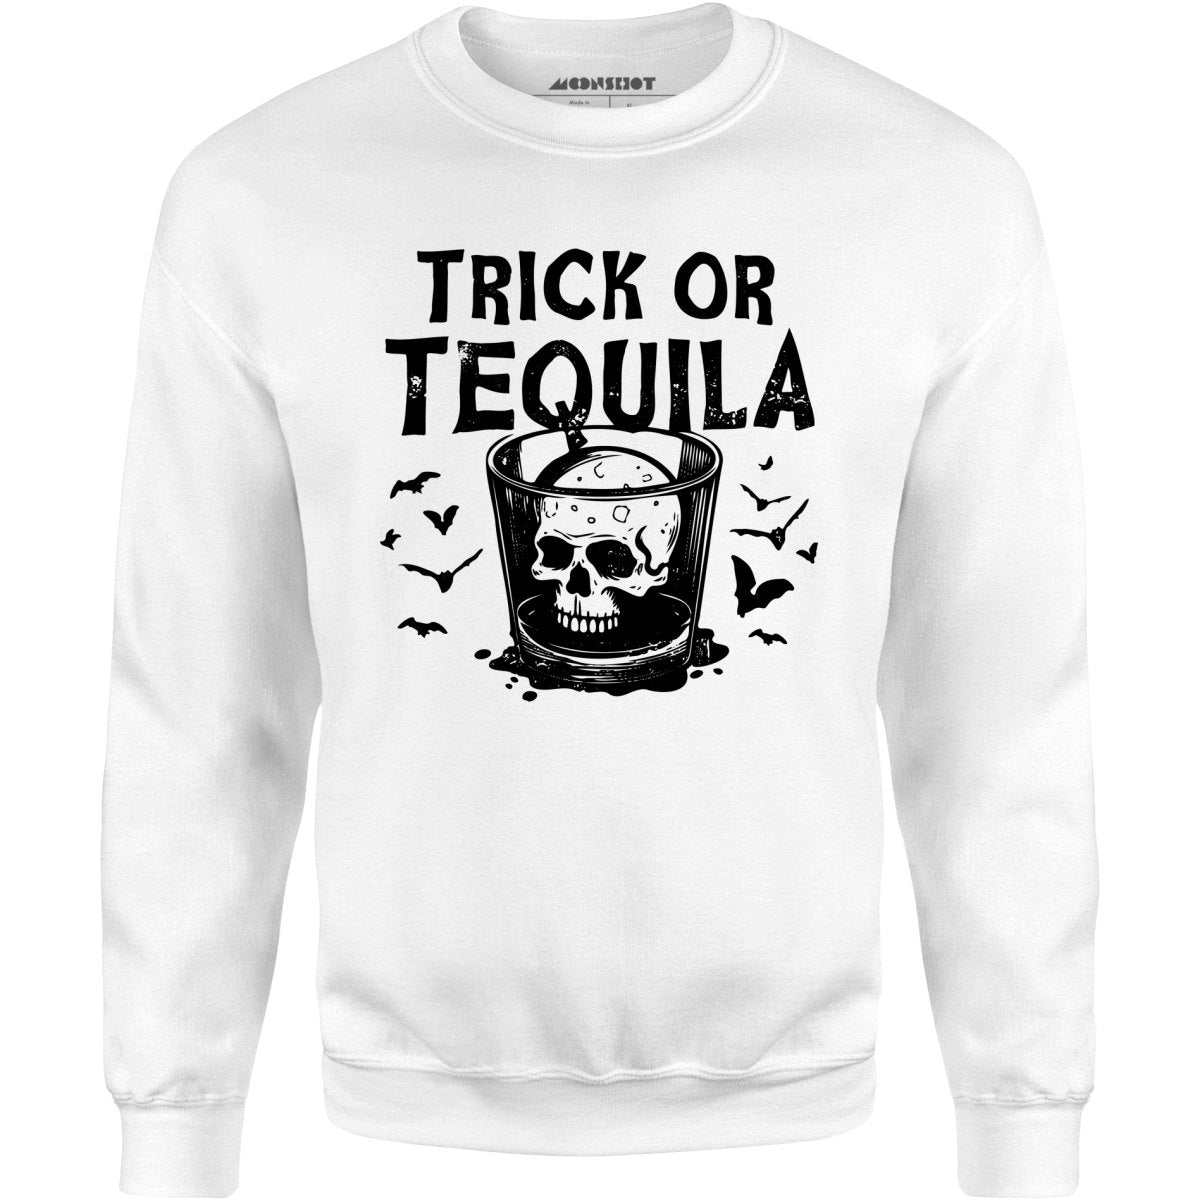 Trick or Tequila - Unisex Sweatshirt